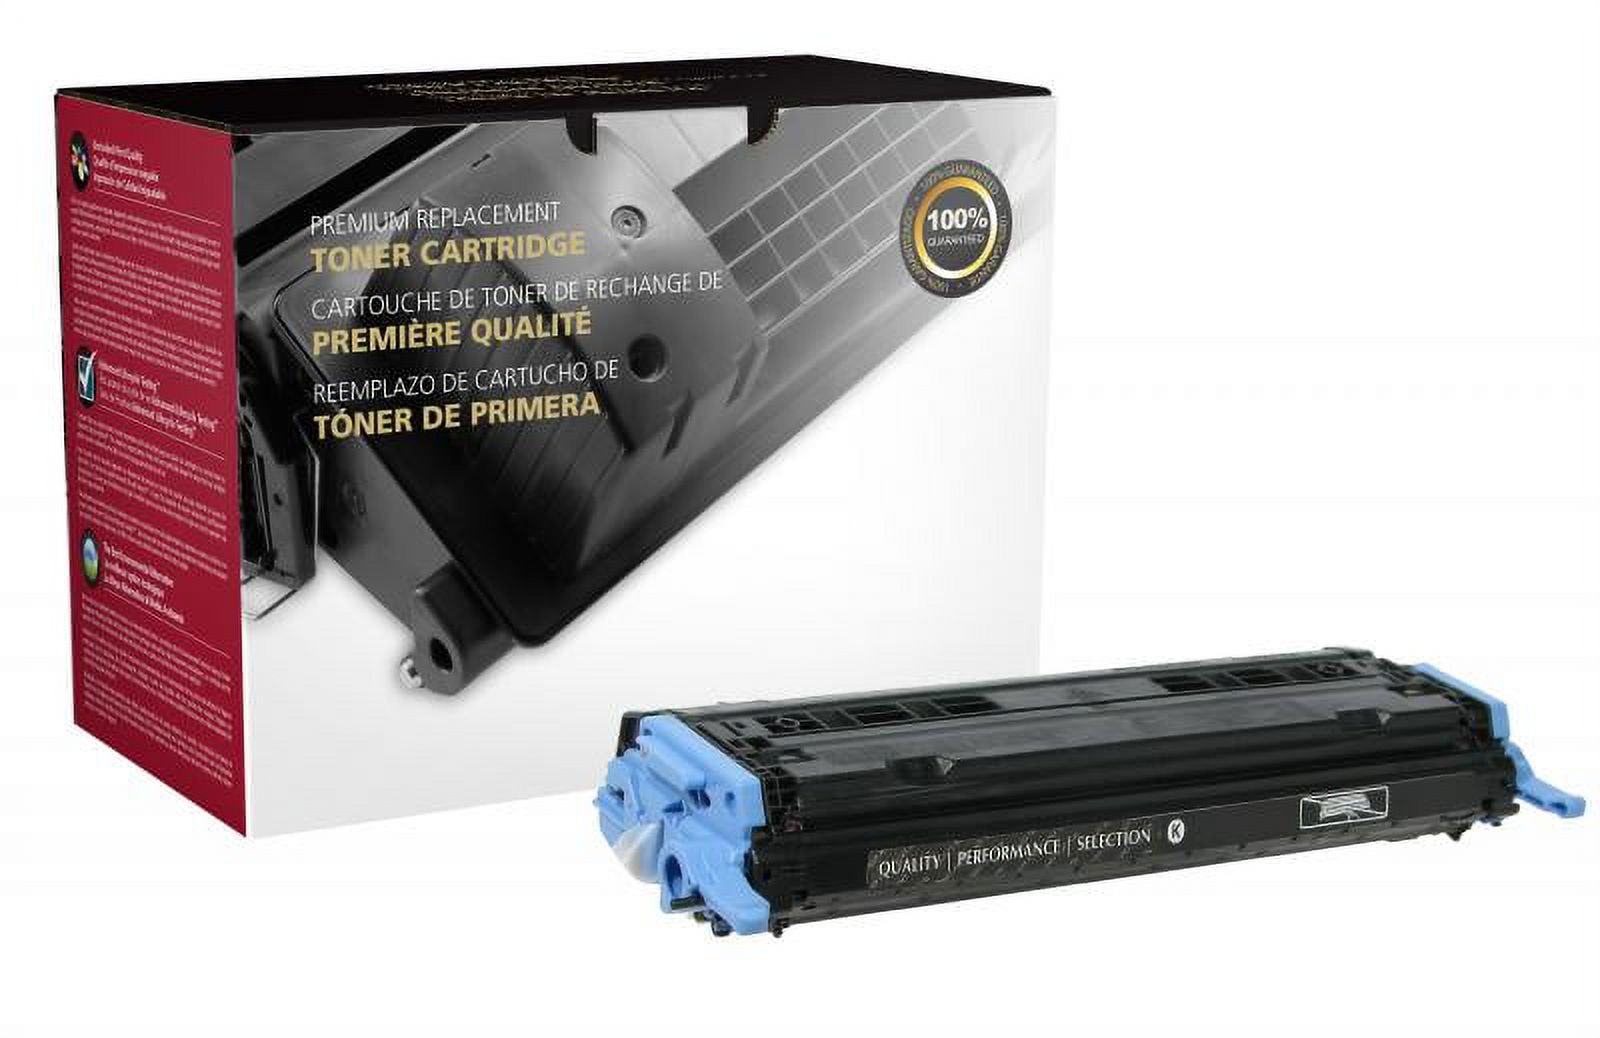 Clover Imaging Remanufactured Black Toner Cartridge for Q6000A ( 124A) - image 1 of 2